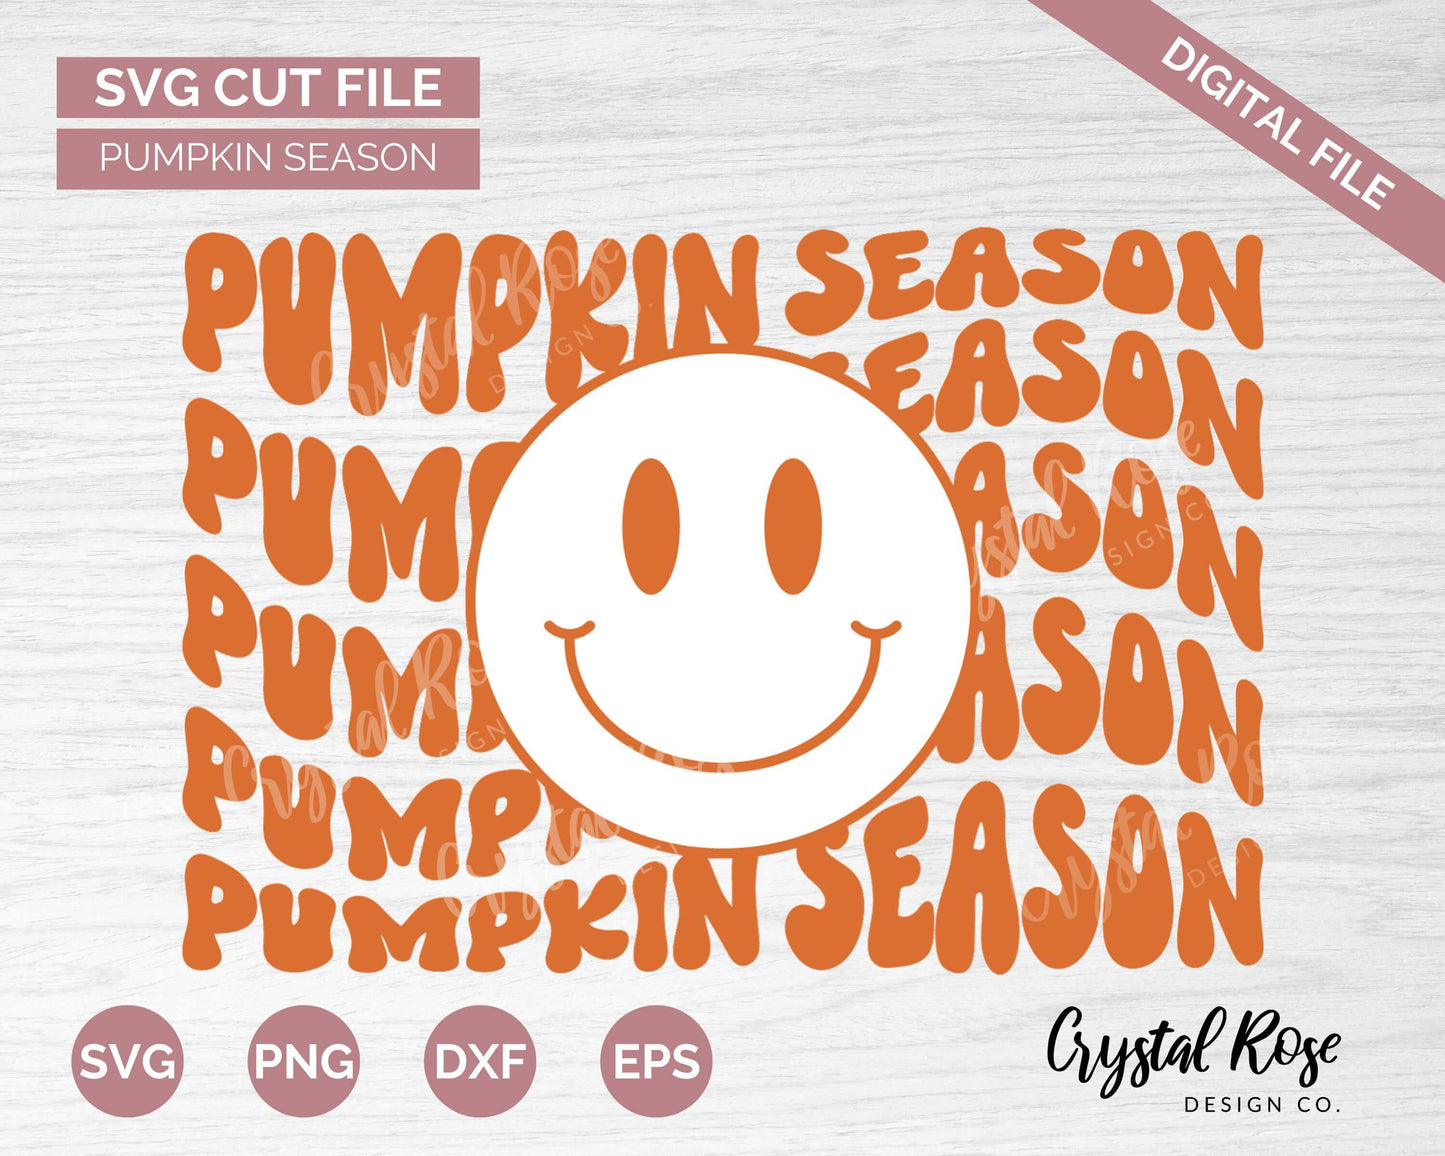 Pumpkin Season SVG, Fall SVG, Digital Download, Cricut, Silhouette, Glowforge (includes svg/png/dxf/eps) - Crystal Rose Design Co.